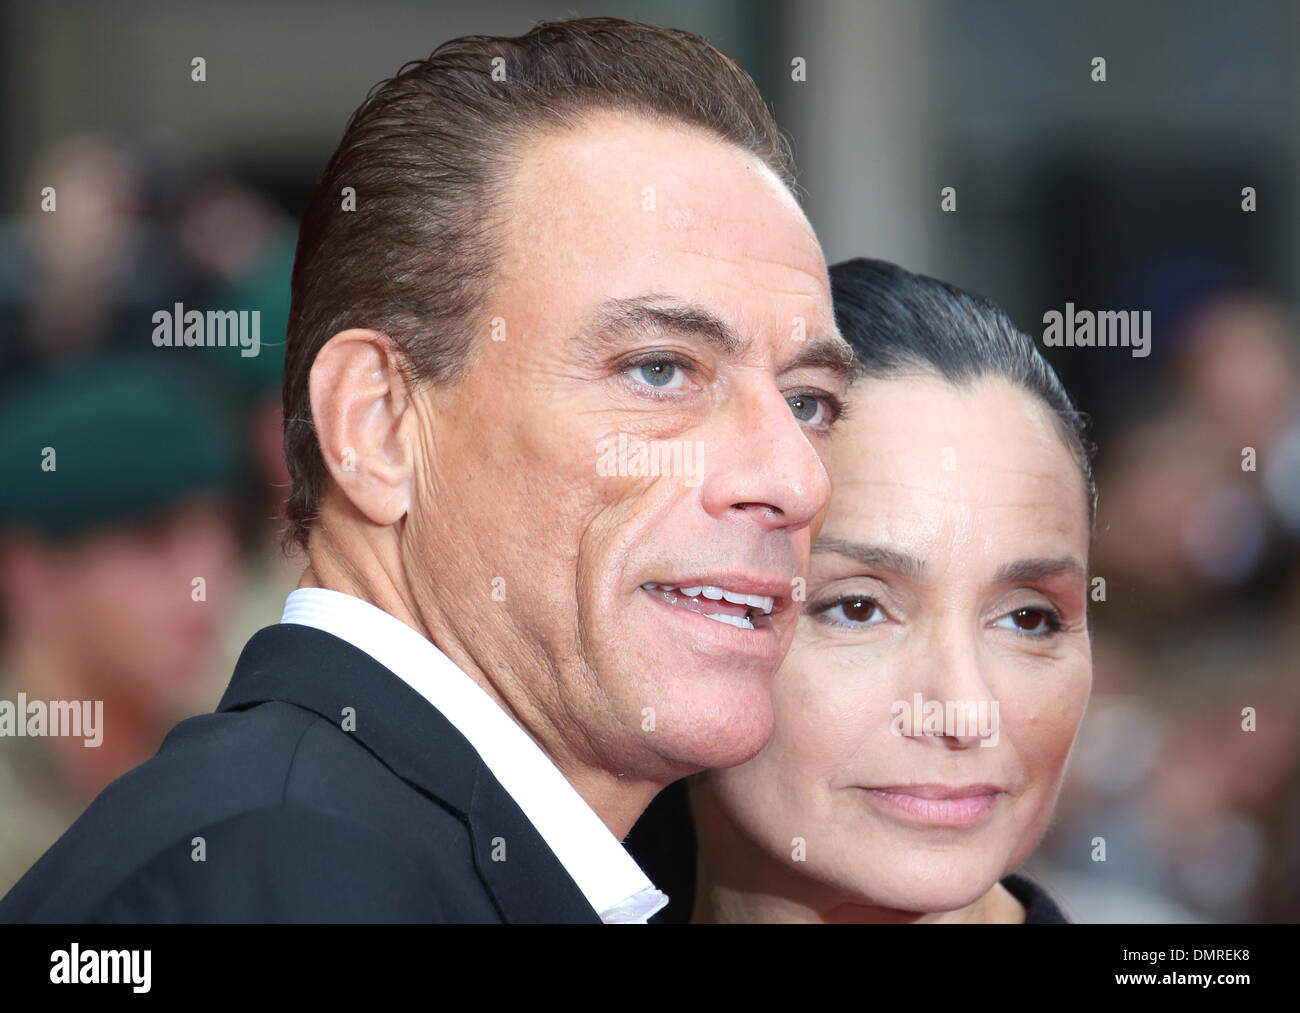 Jean-Claude Van Damme und Frau Gladys Portugues "The Expendables 2" UK  Premiere statt auf Empire Leicester Square - Ankünfte Stockfotografie -  Alamy